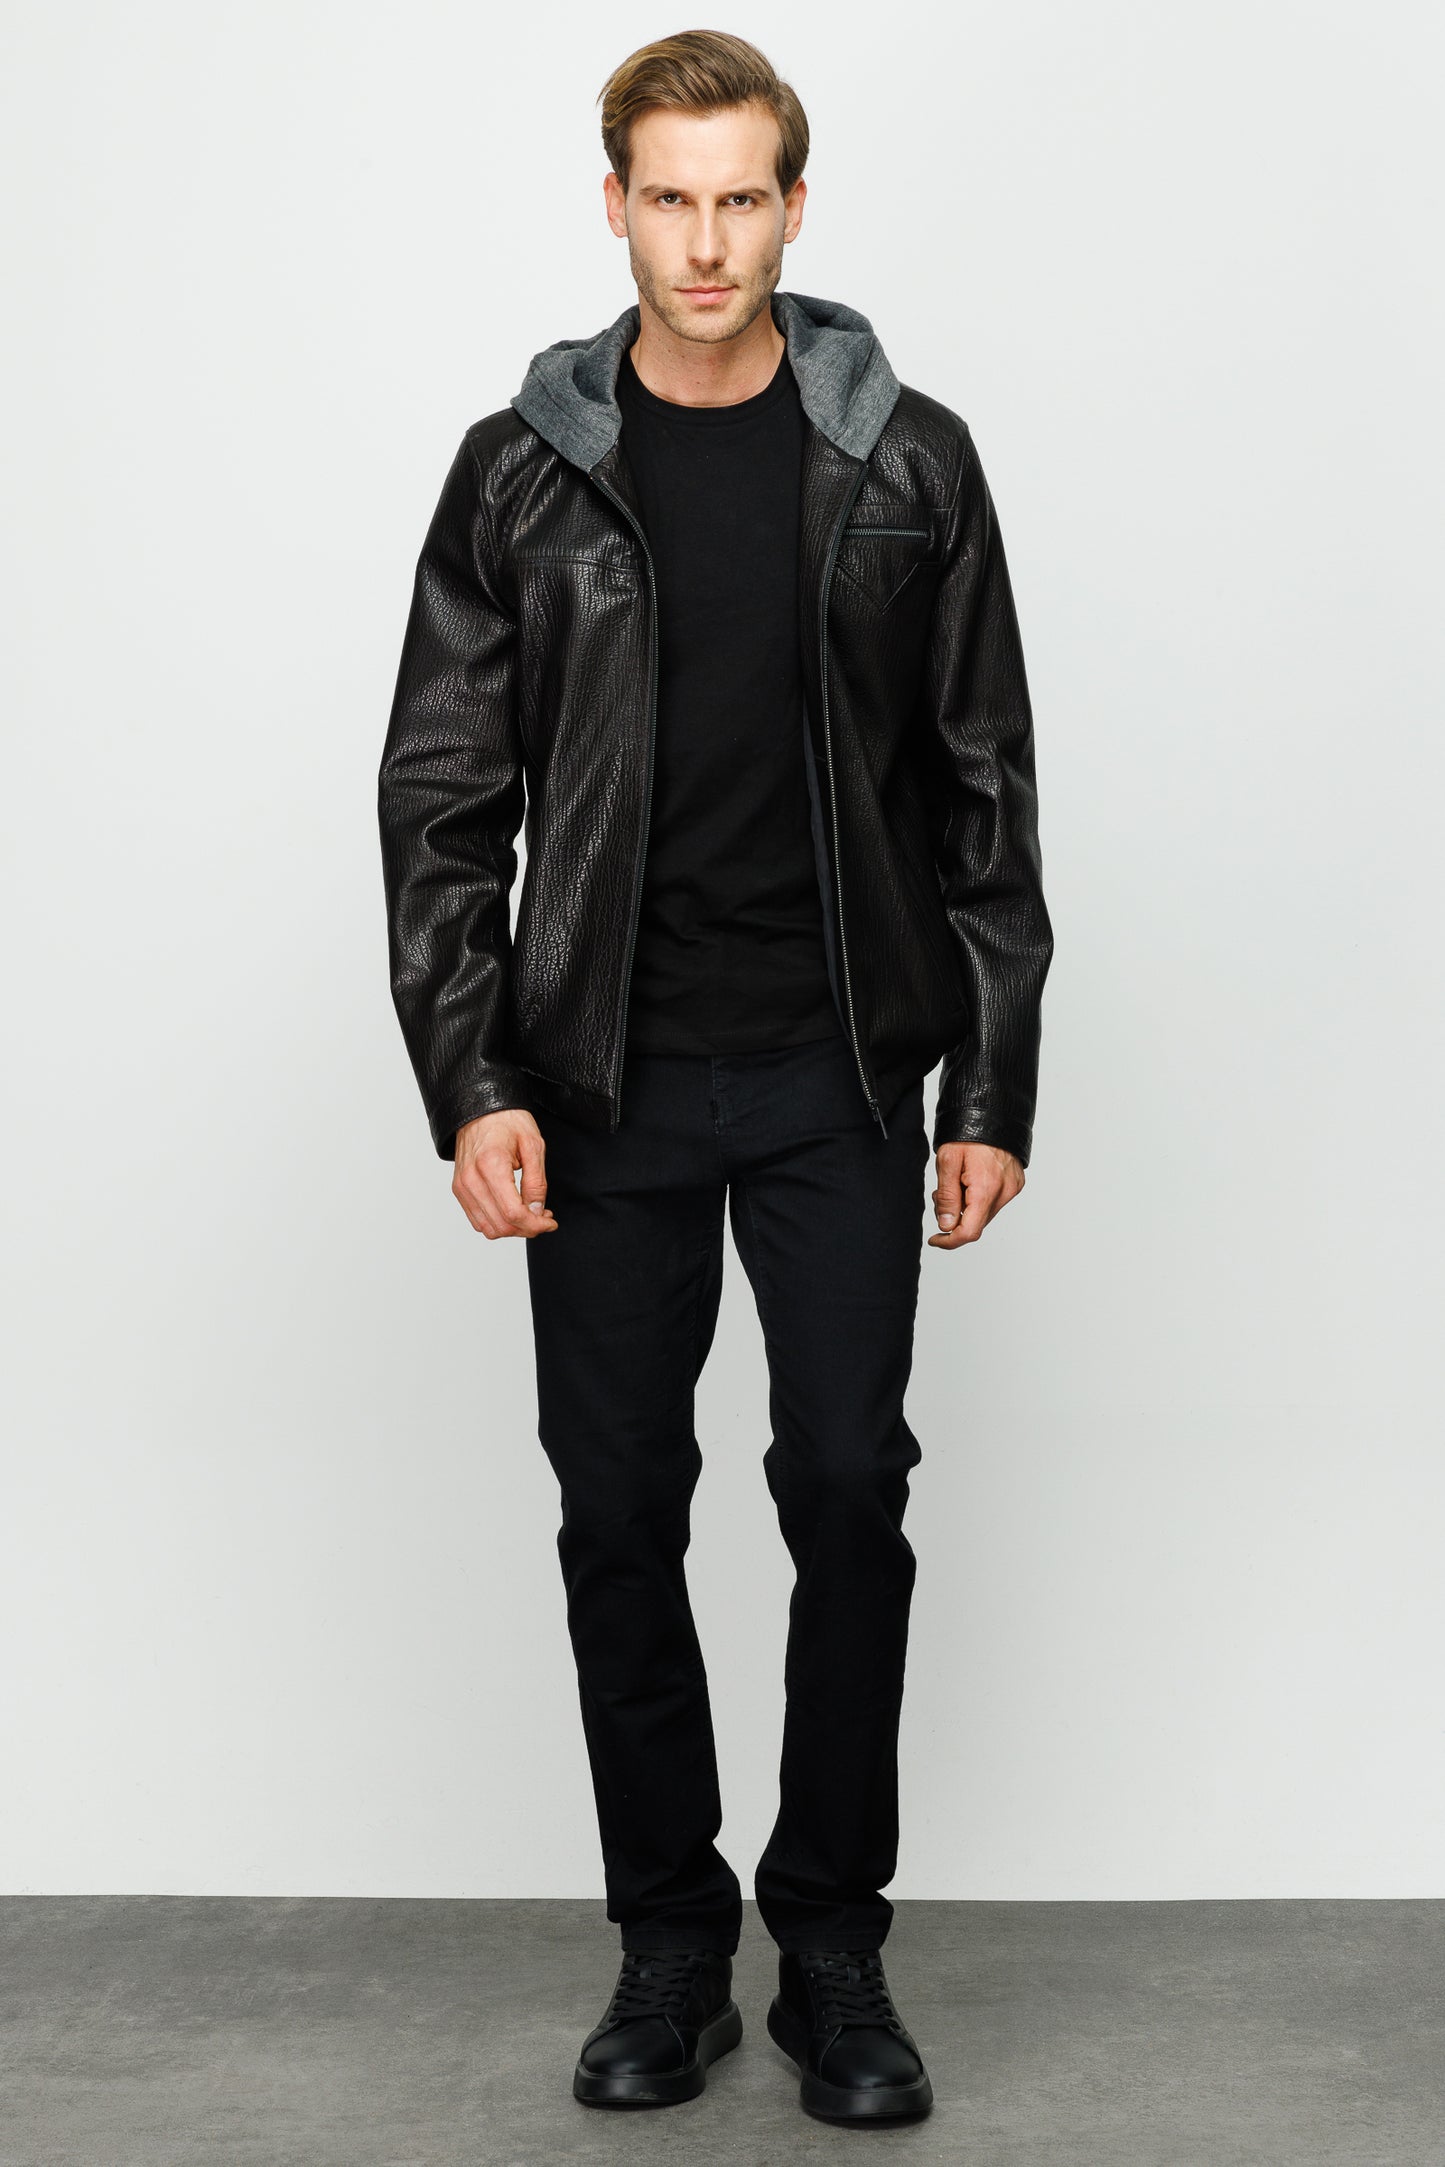 The Byron Ribi Black Leather Men Jacket